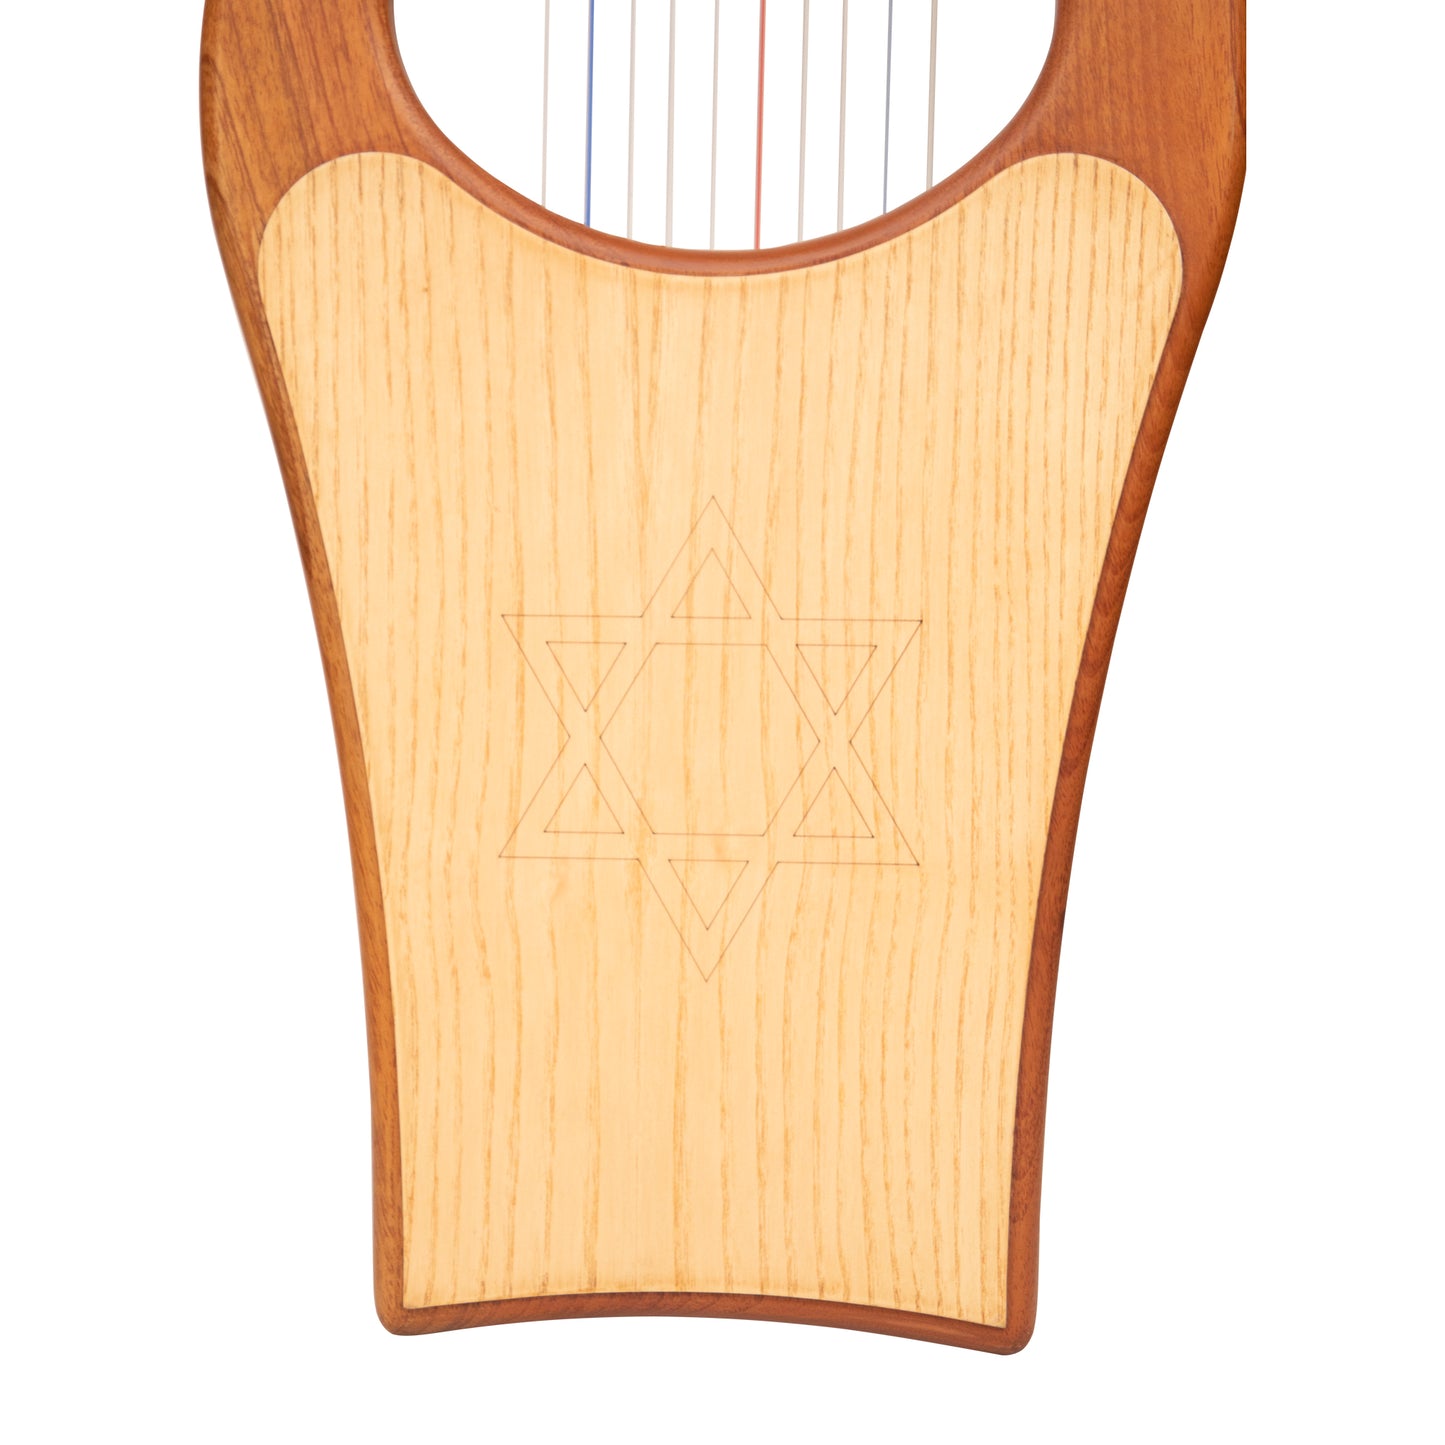 Muzikkon Large Kinnor Harp, 10 String Red Cedar